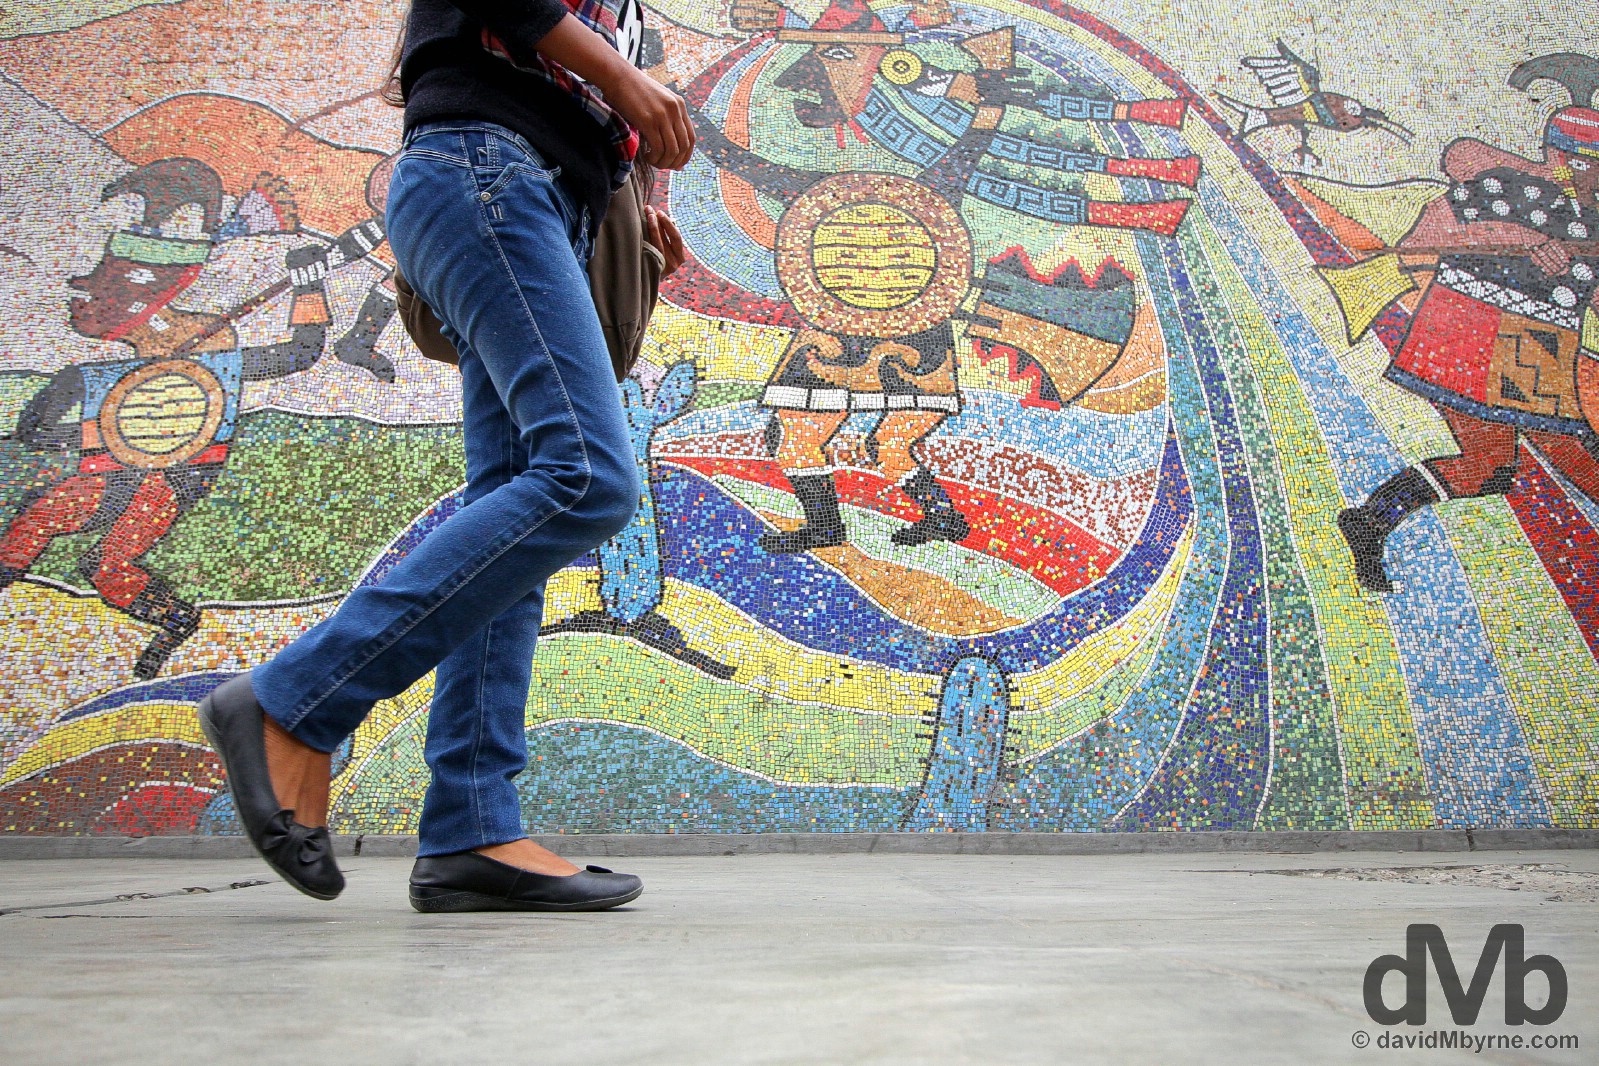 Walking past the mosaic on the walls of the Universidad Nacional de Trujillo in Trujillo, northwestern Peru. August 1, 2015.